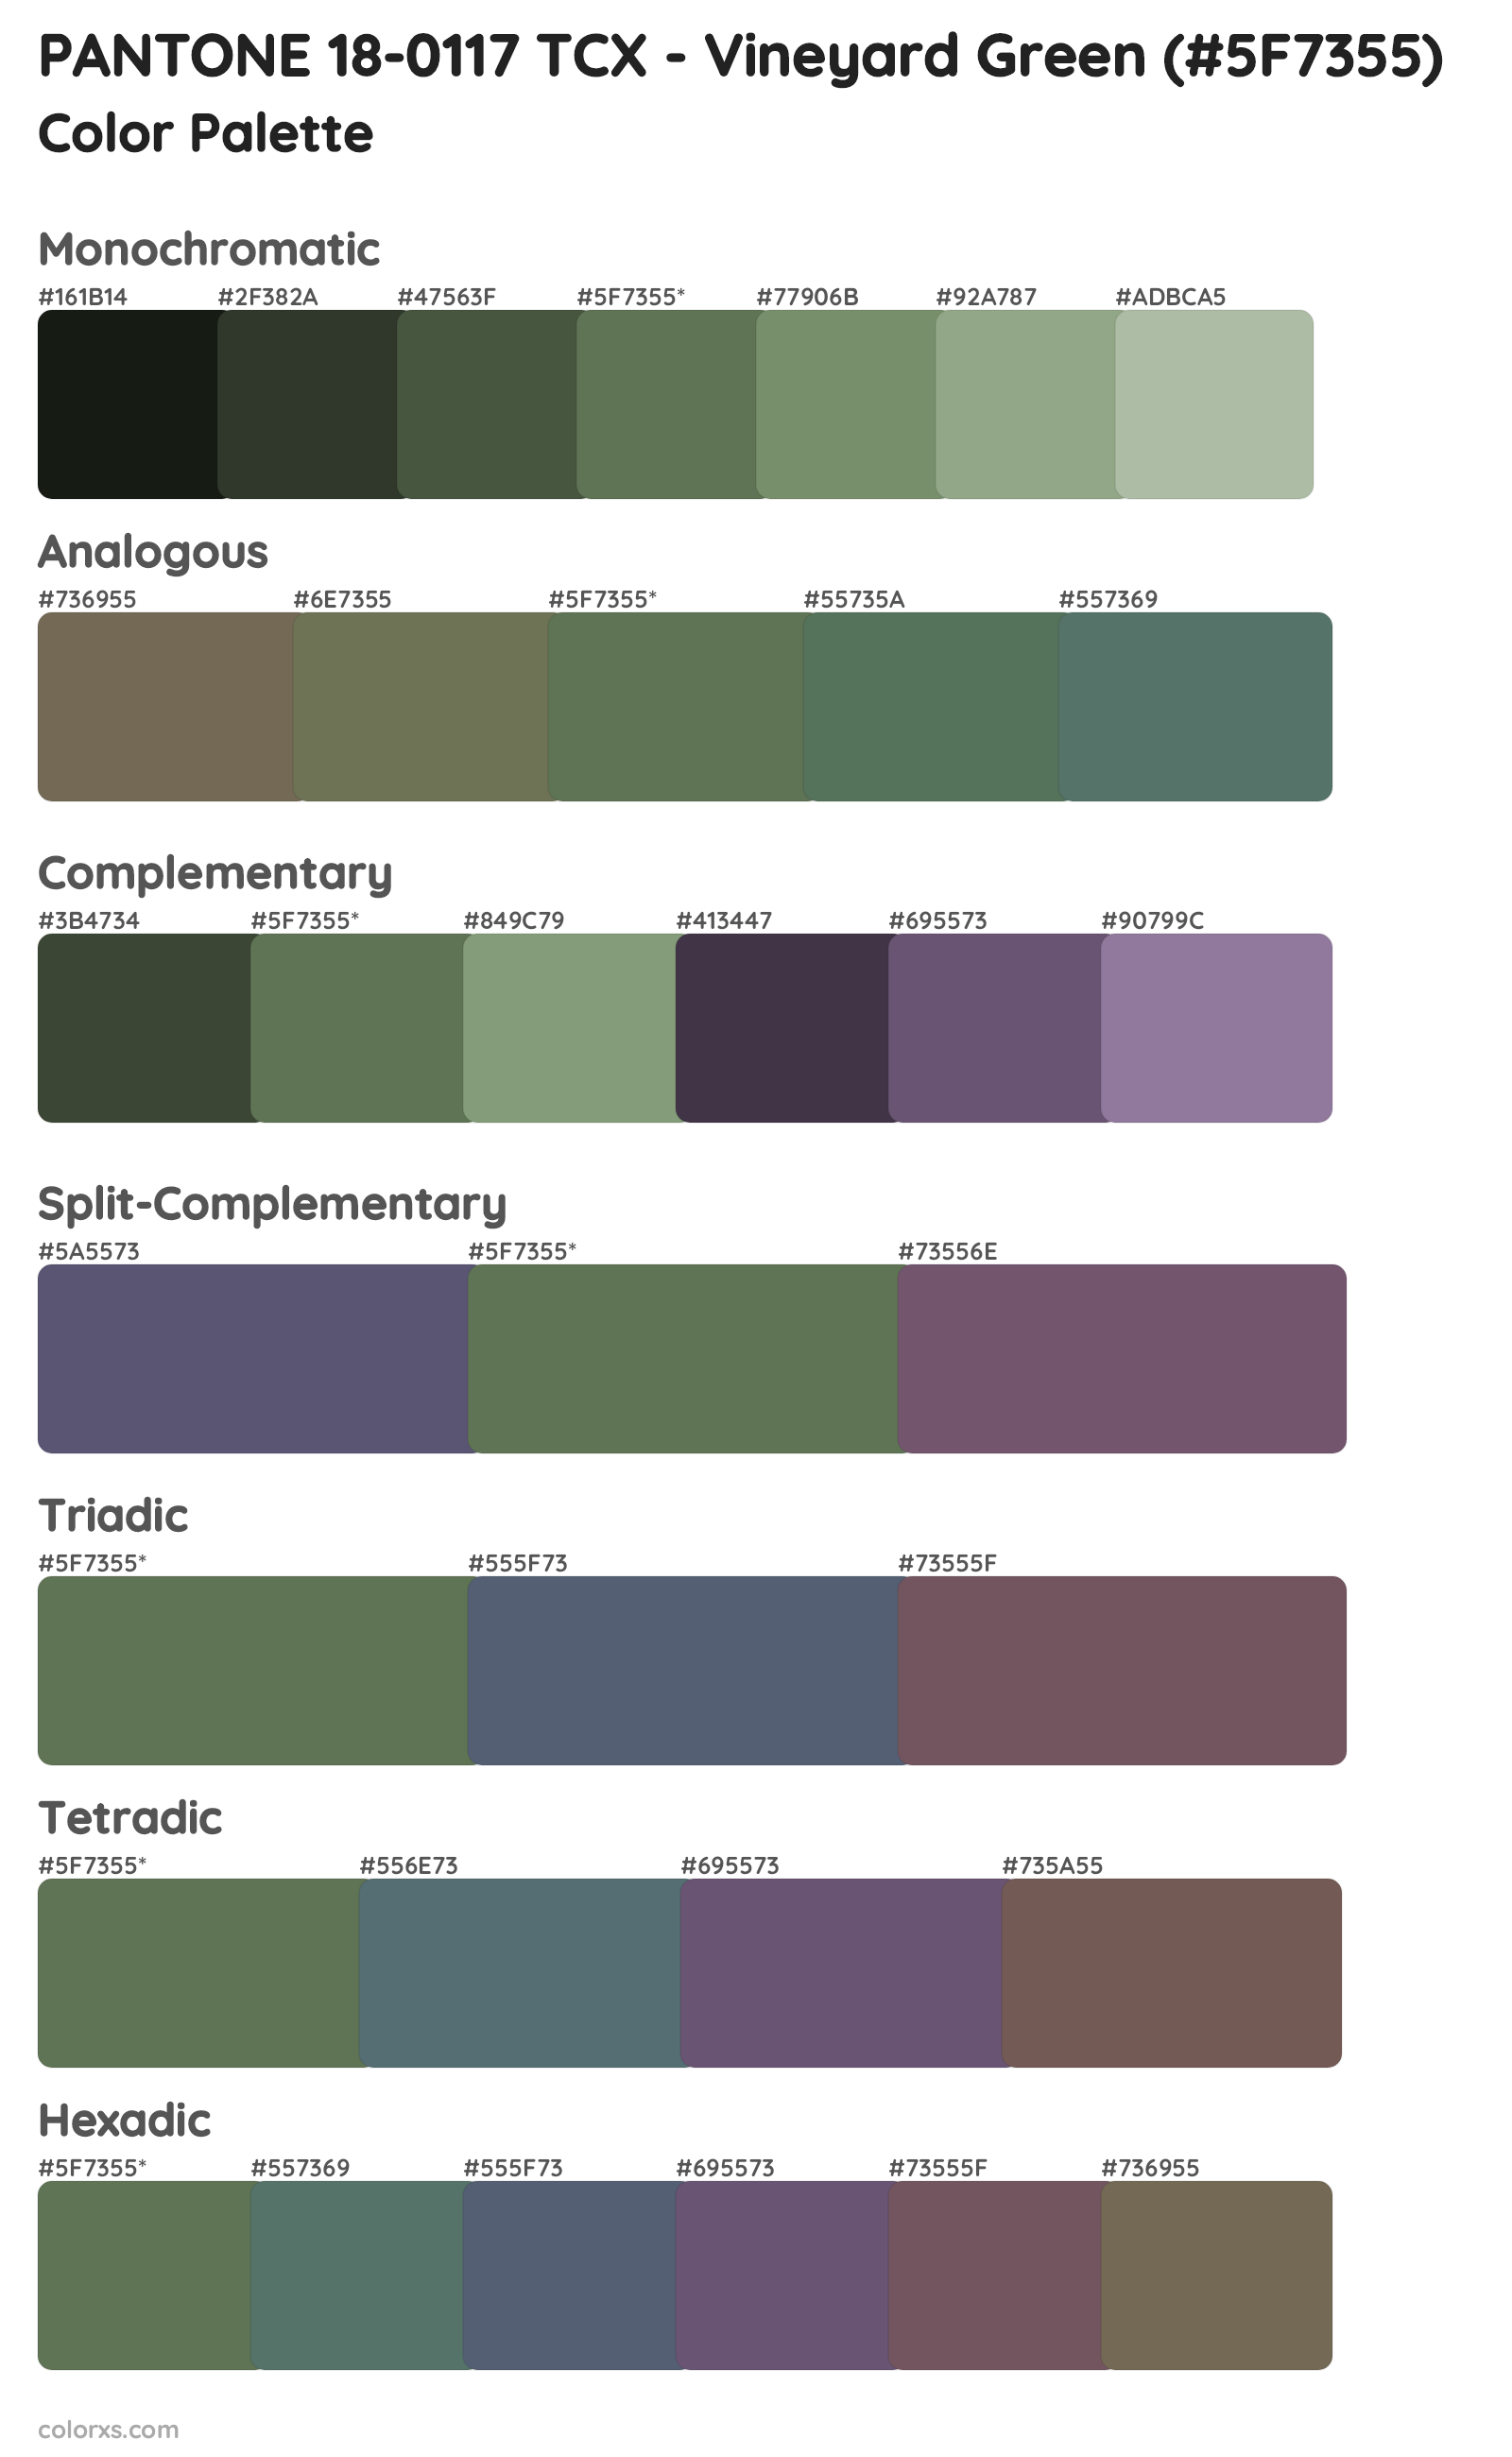 PANTONE 18-0117 TCX - Vineyard Green Color Scheme Palettes